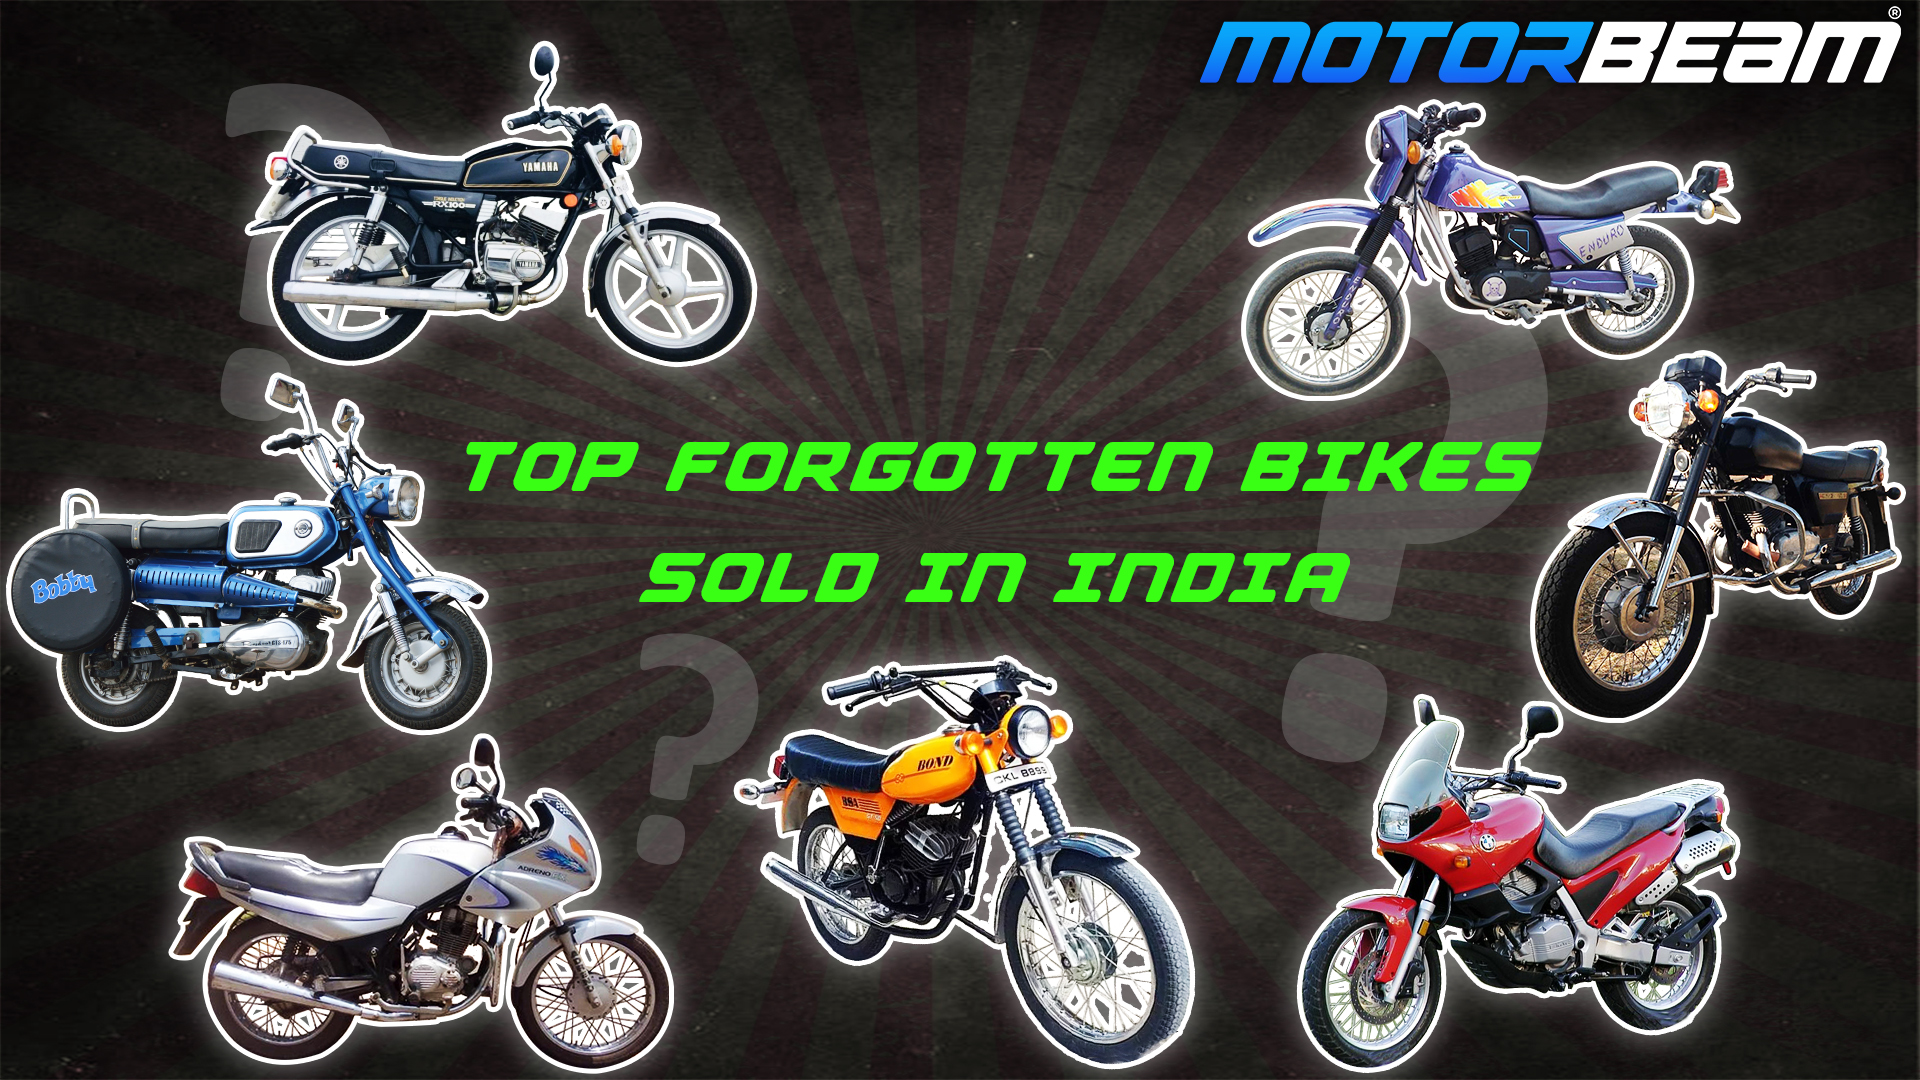 Top 10 Forgotten Bikes Sold In India